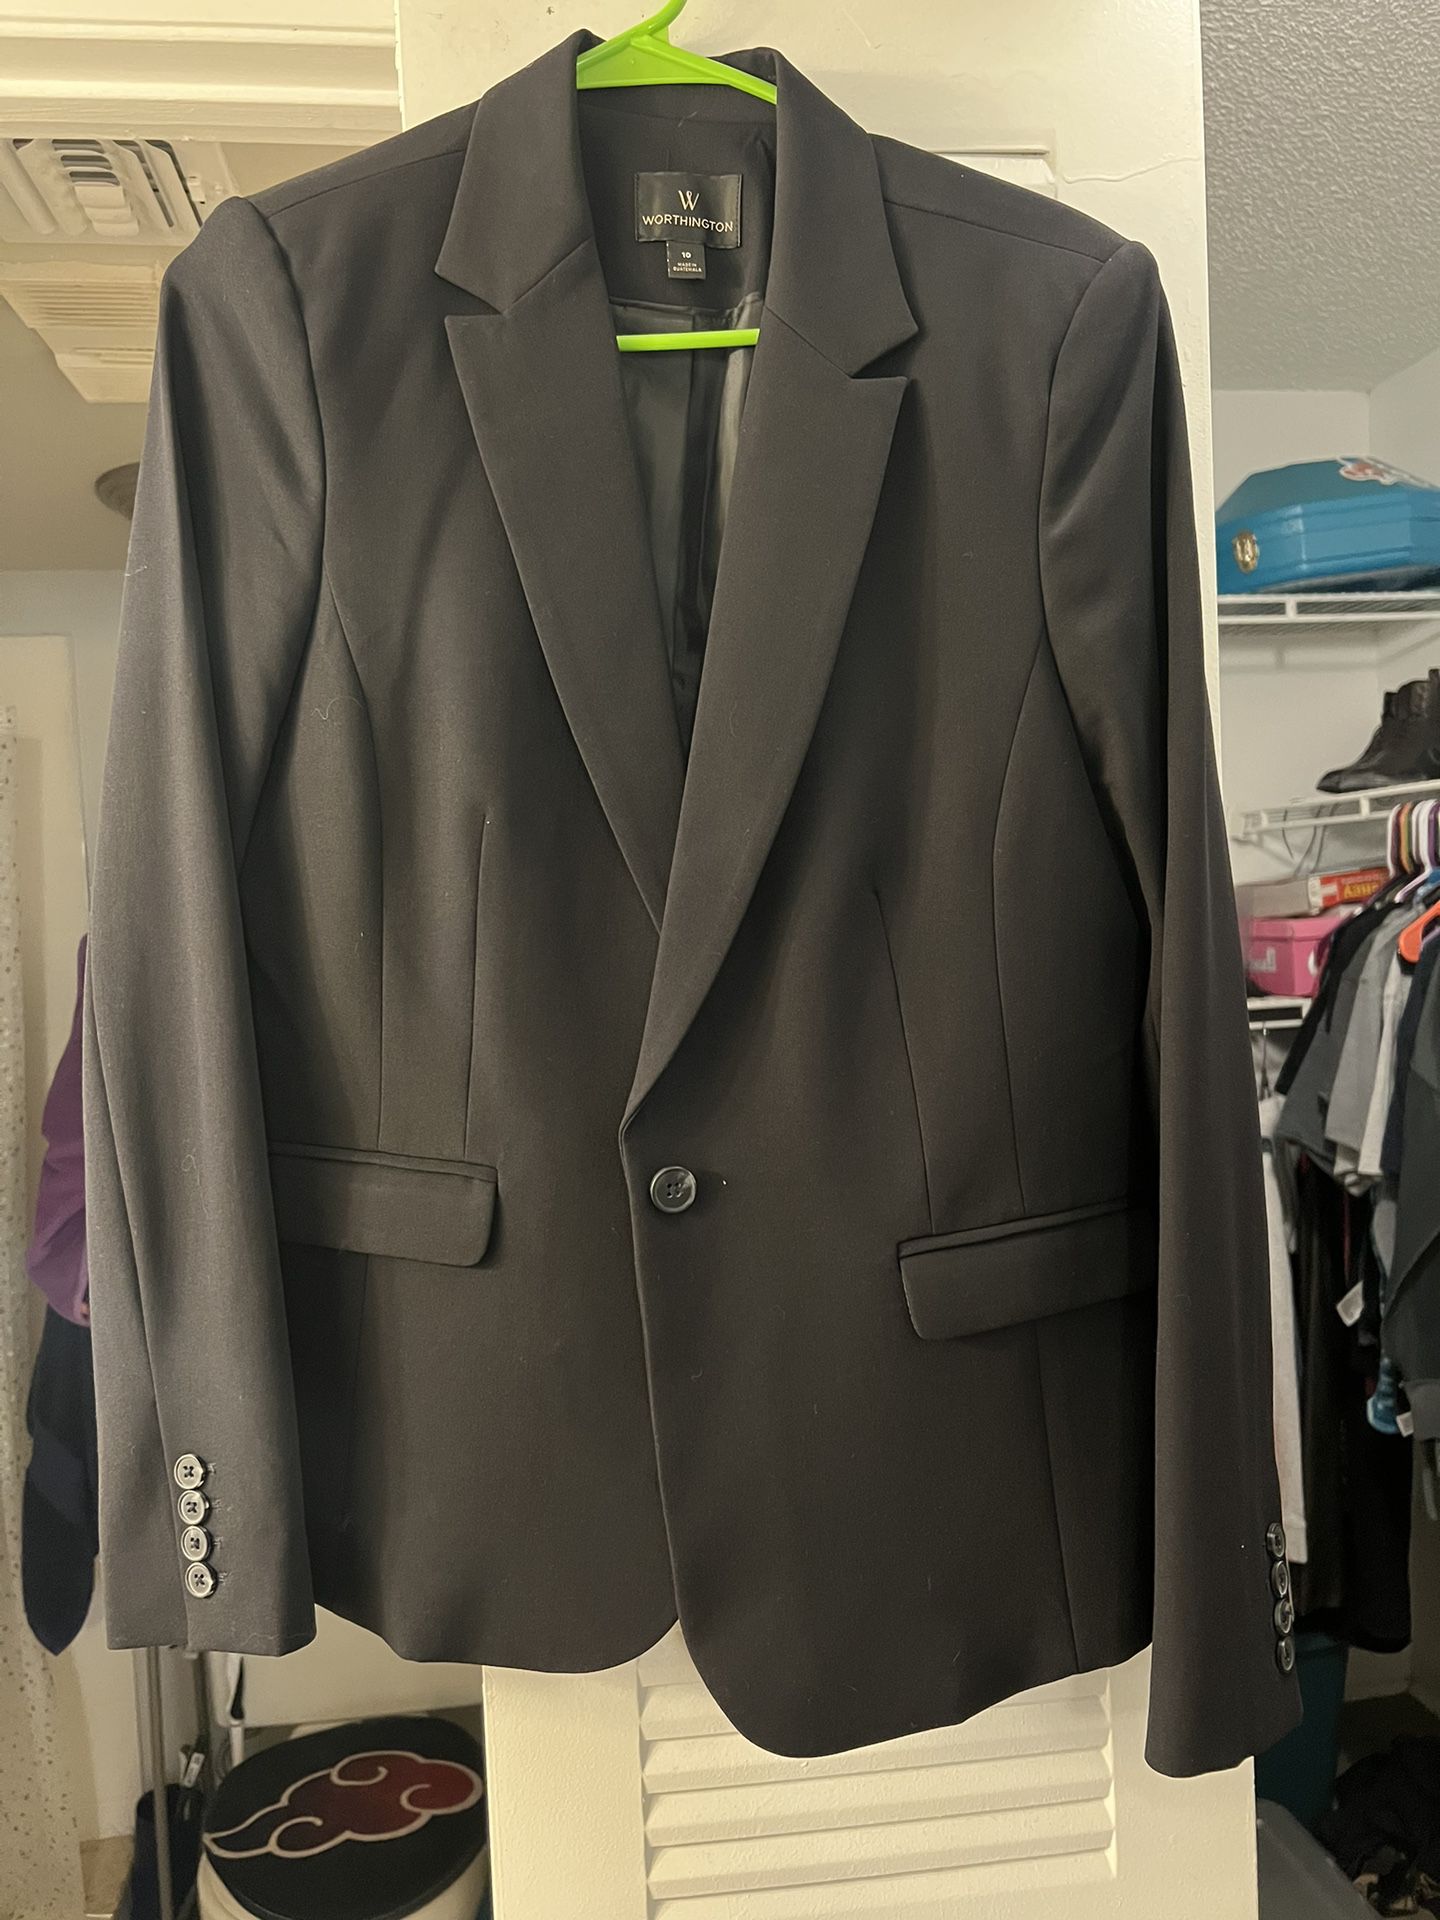 Worthington Suit Jacket And Pants Combo